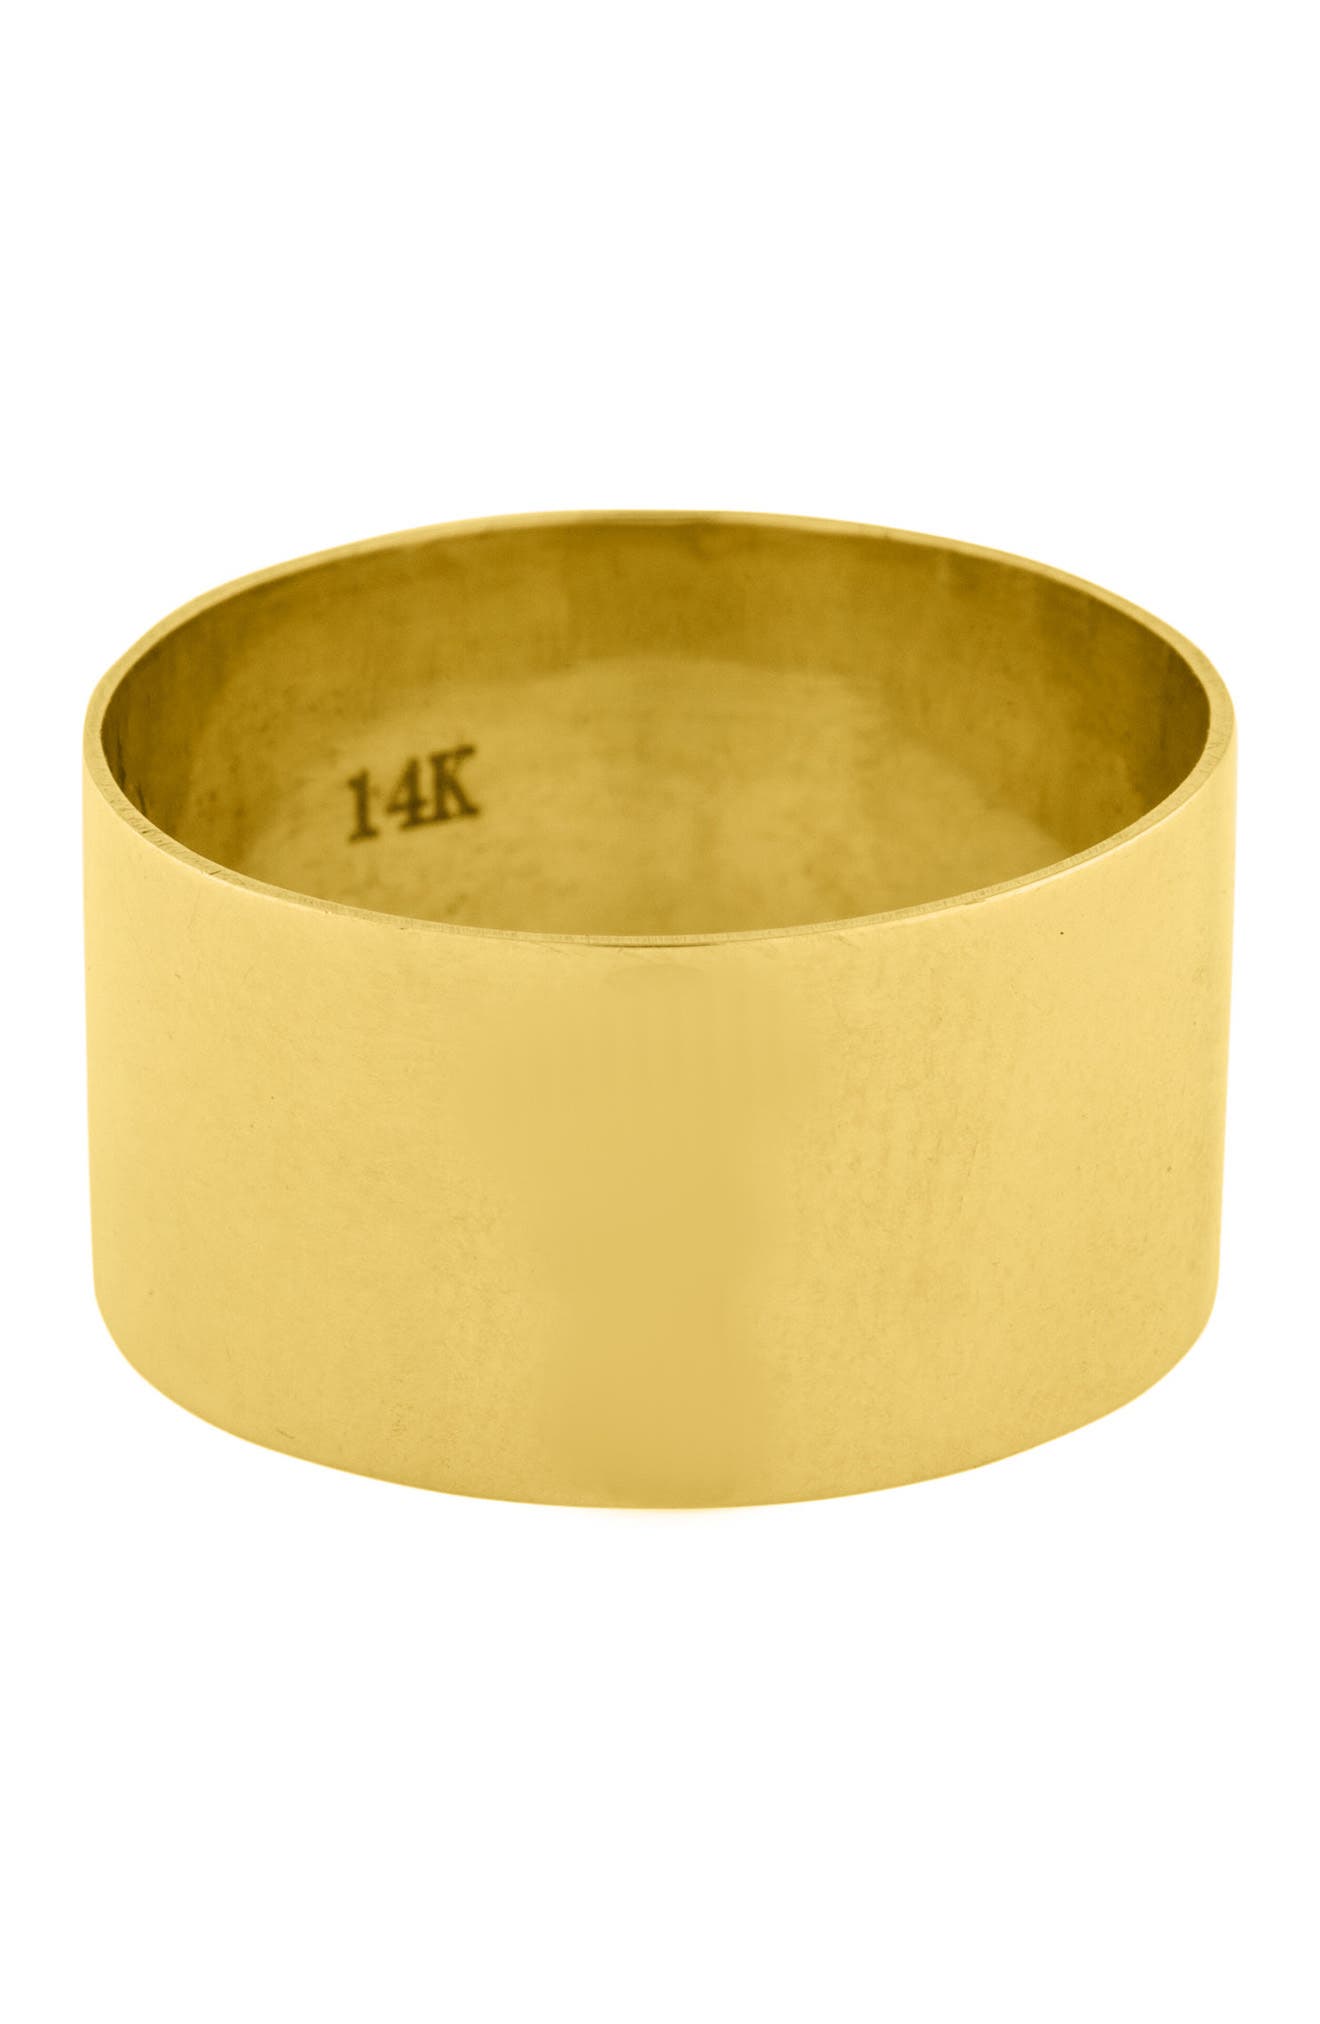 Adornia Fine 14k Yellow Gold 10mm Cigar Band Ring